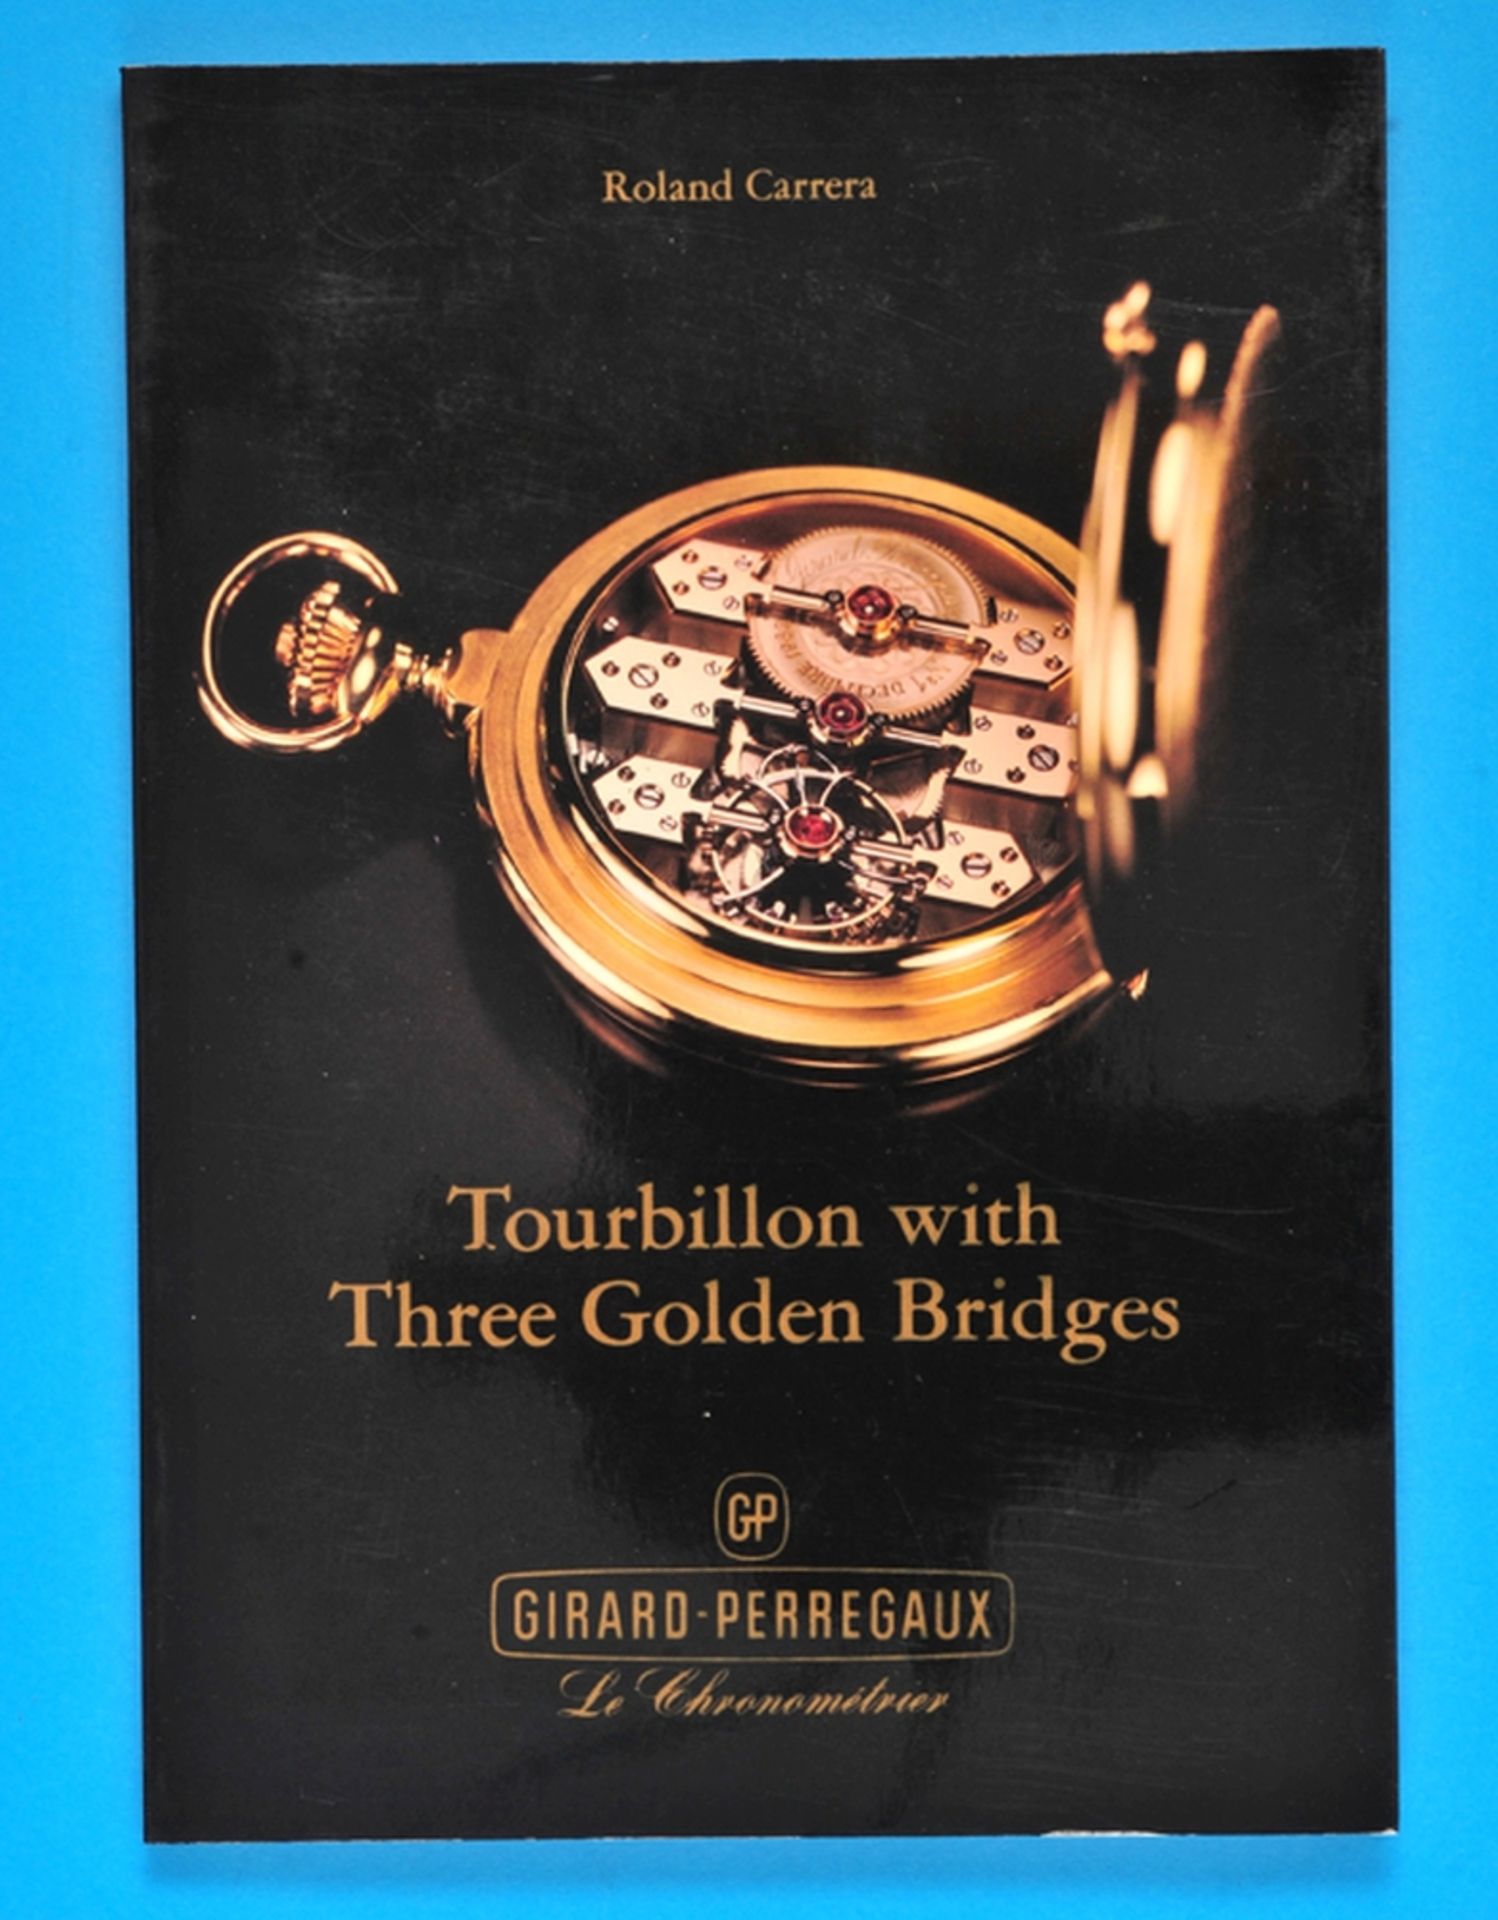 Roland Carrera, Tourbillon with Three golden Bridges, Le Chronométrier Girard-Perregaux